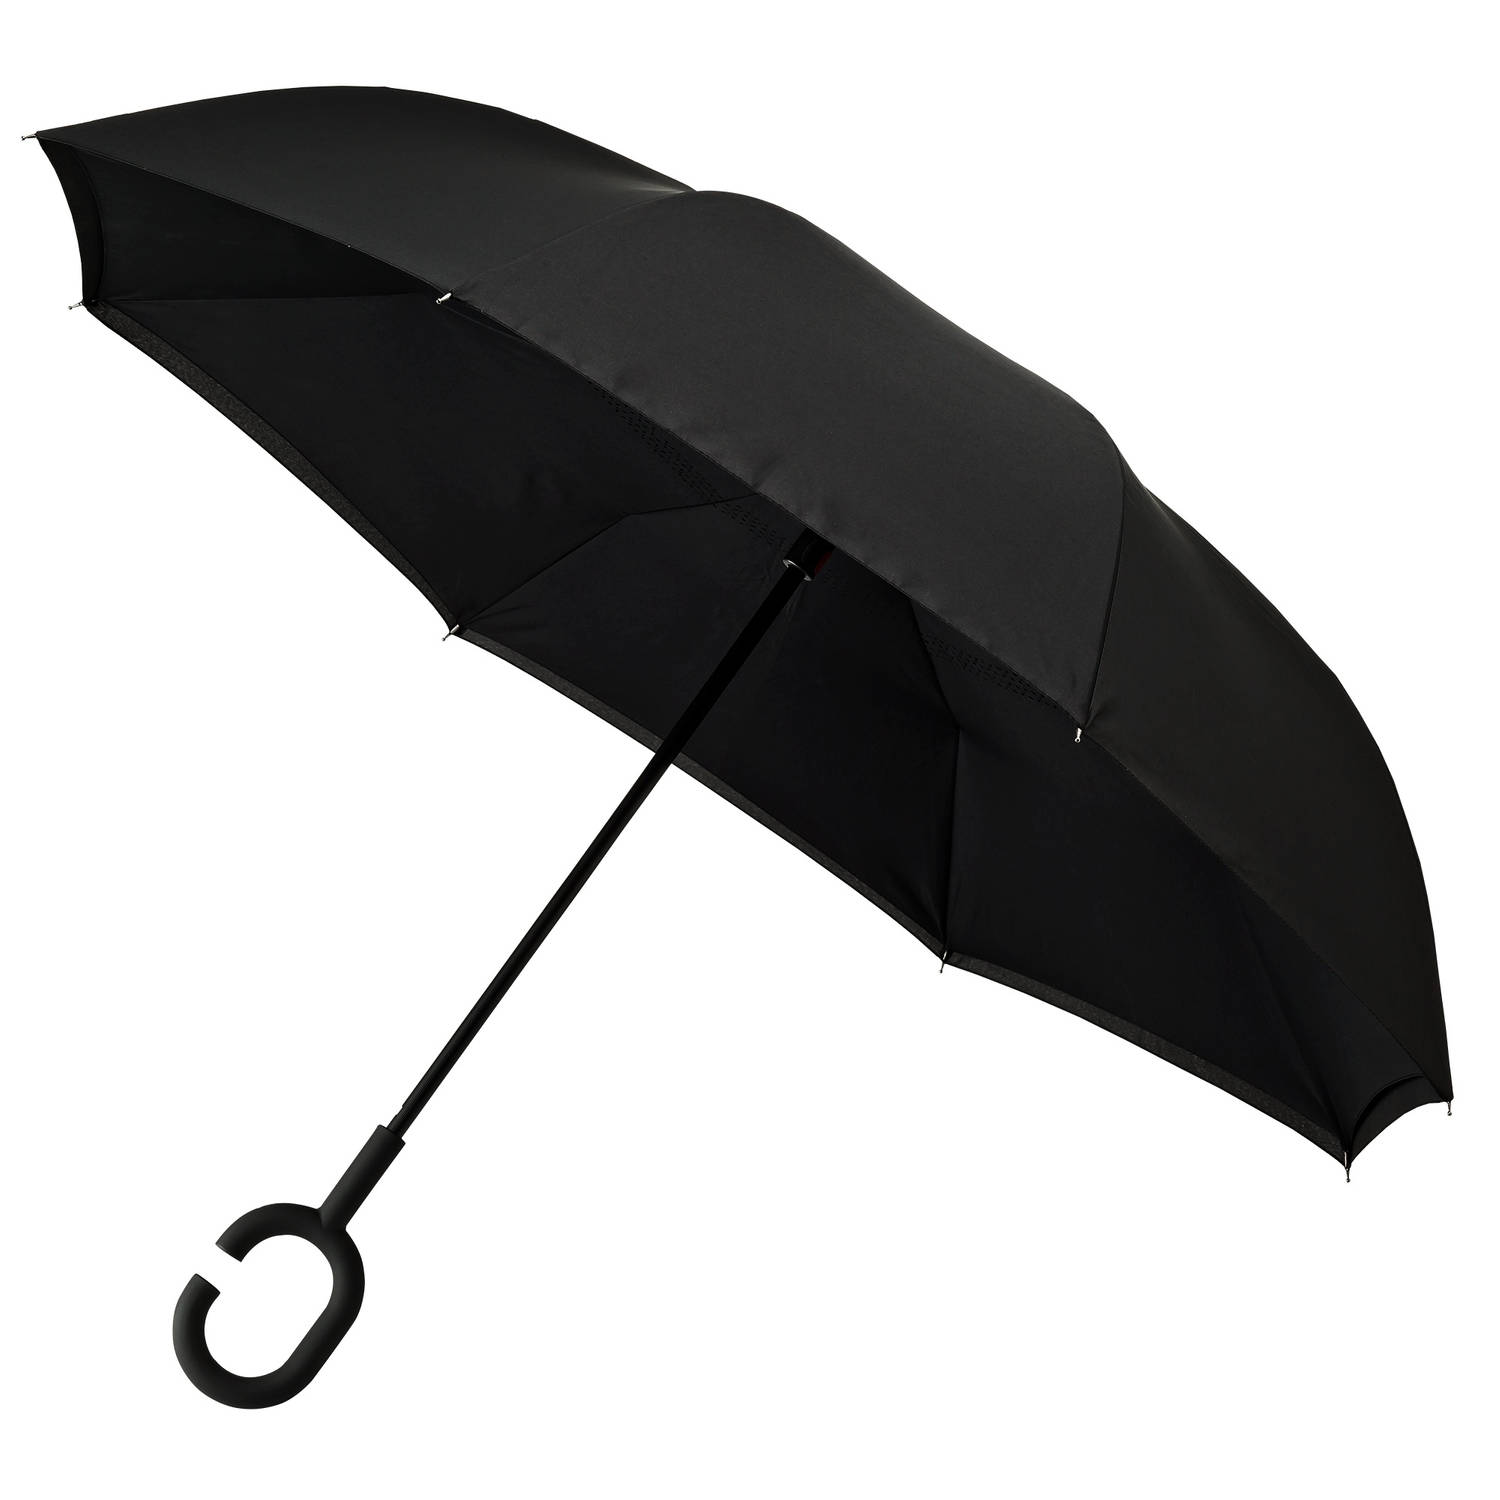 Impliva paraplu Inside Out handopening 107 cm zwart